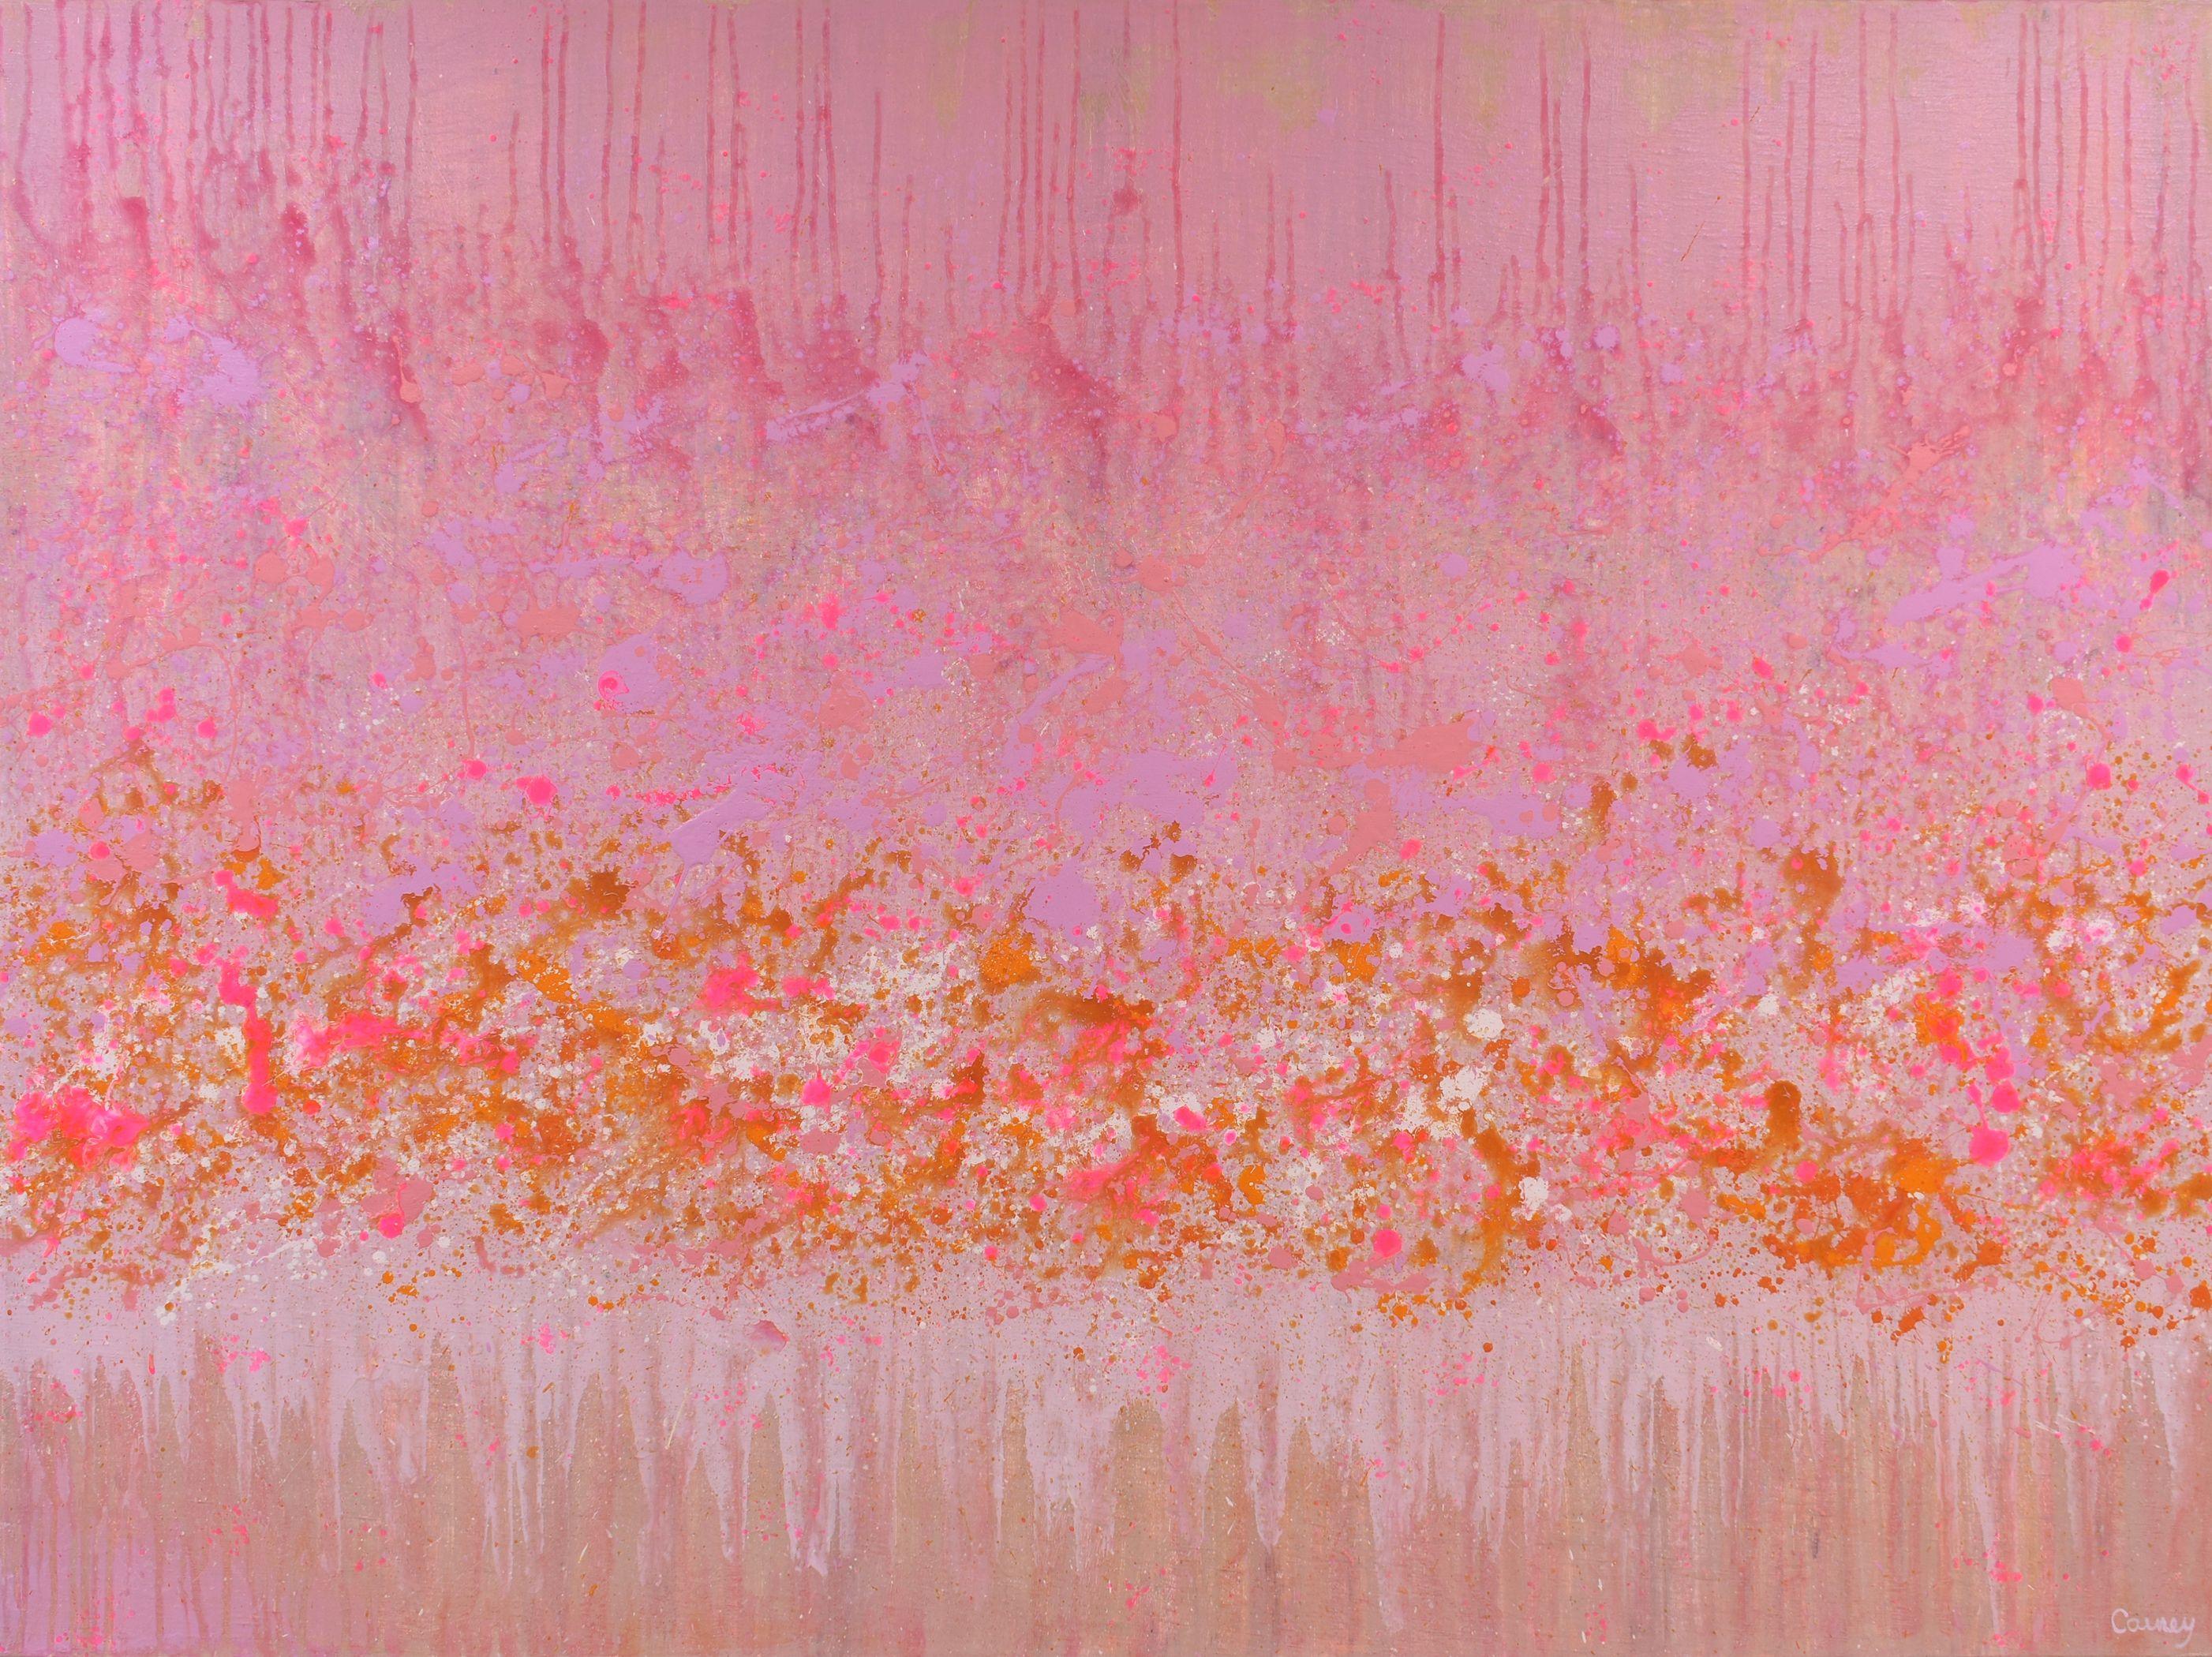 â€œCoral Gardenâ€ is a large floral abstract painting in acrylic on canvas. It was created in different shades of pink and orange. It is from the "GeoFlora" series, a collection of floral abstract landscape paintings where drip and spatter